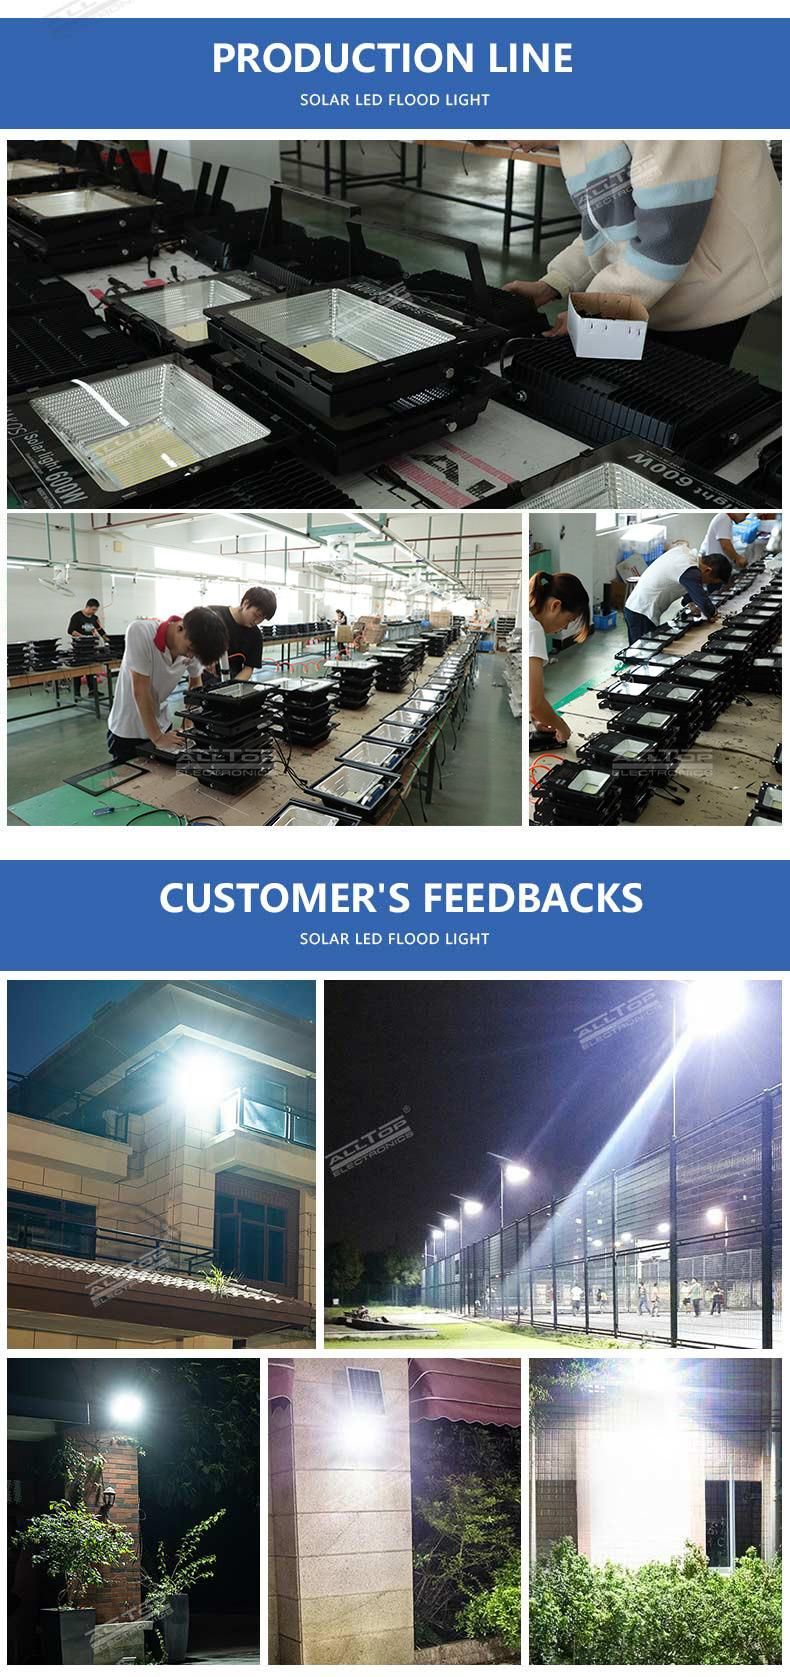 Alltop China Wholesale SMD 25W 40W 60W 100W 200W 300W IP67 Waterproof Outdoor Lighting Solar LED Flood Lamp